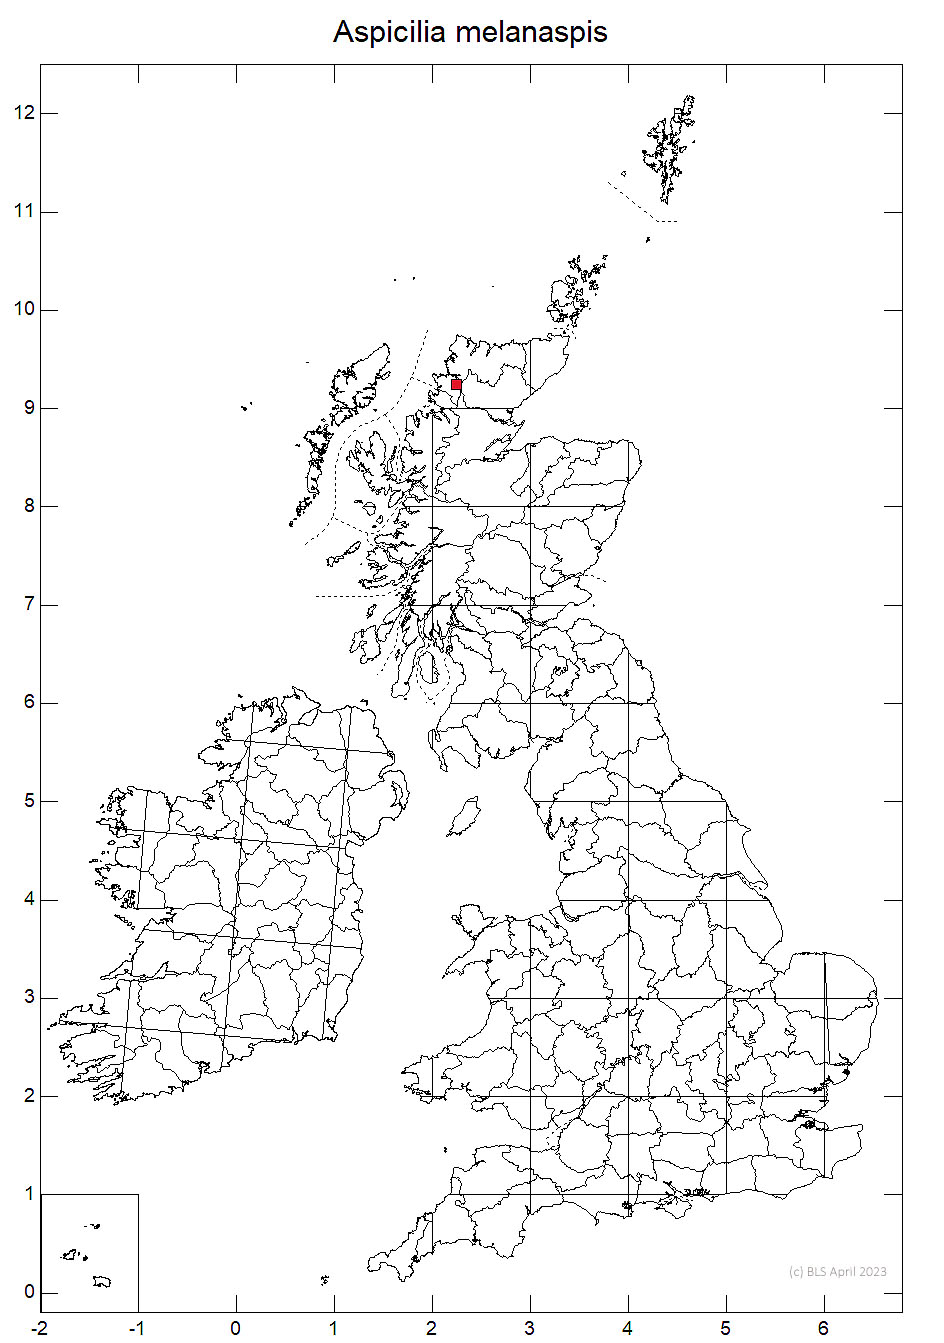 Aspicilia melanaspis 10km sq distribution map